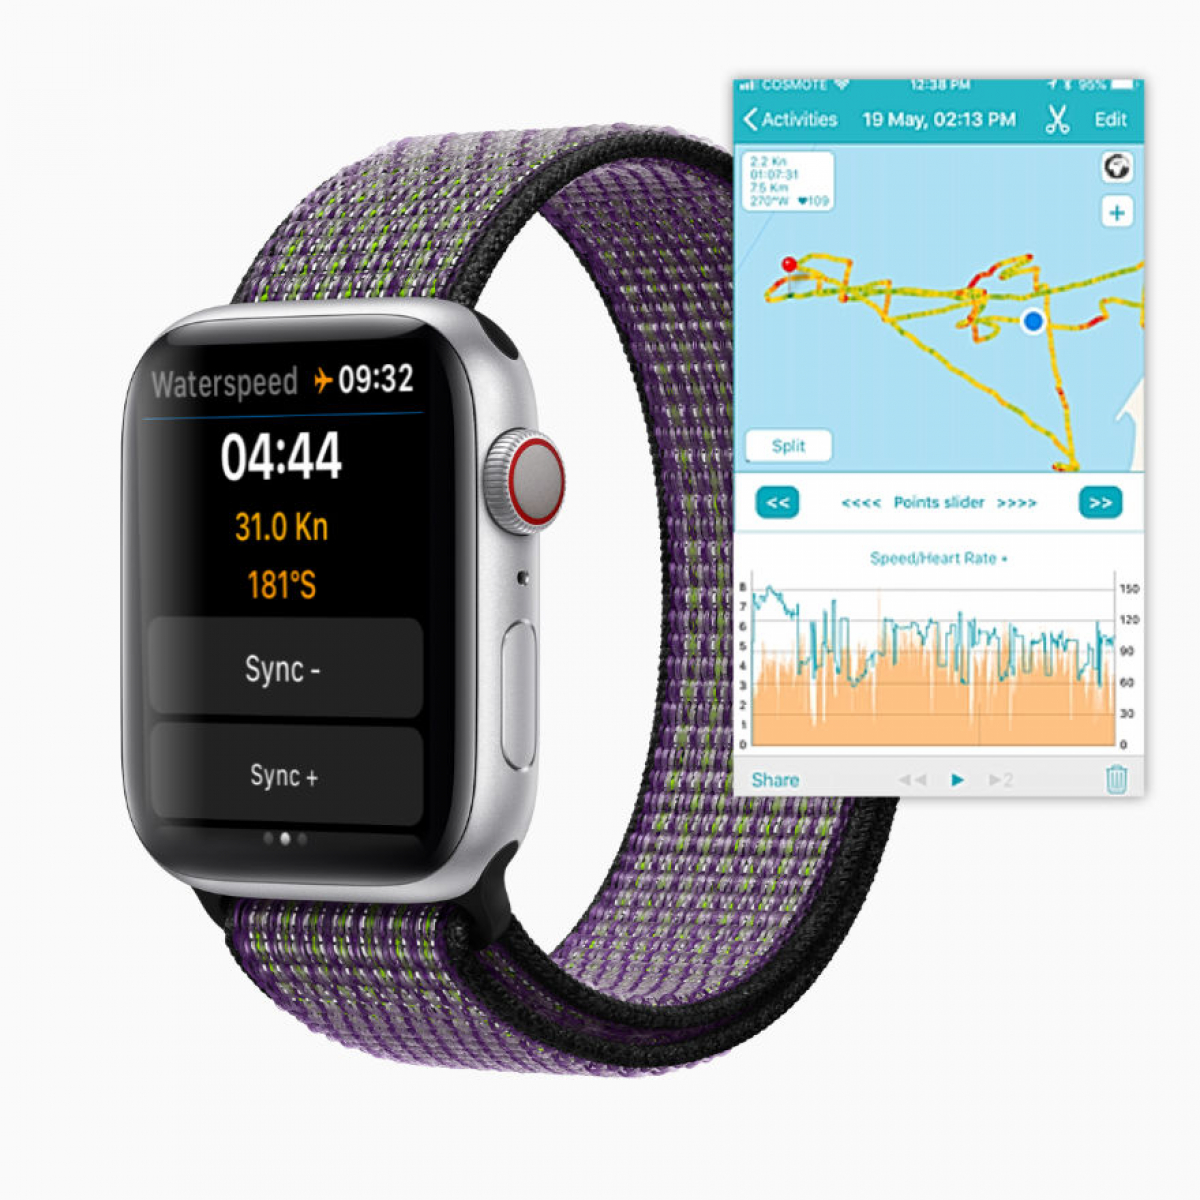 Waterspeed App - Apple Watch